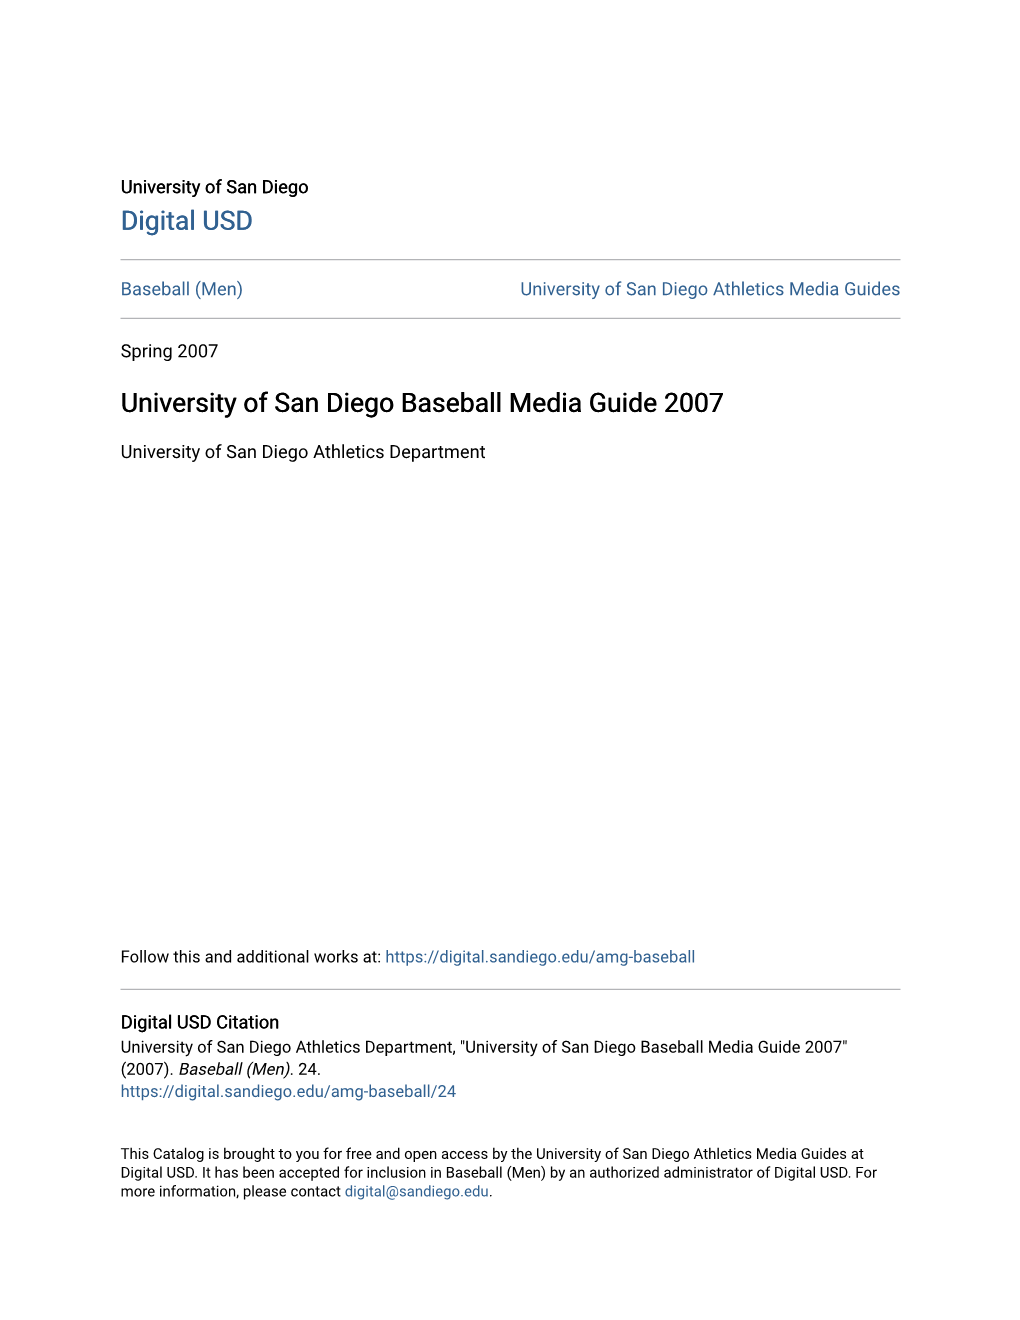 University of San Diego Baseball Media Guide 2007